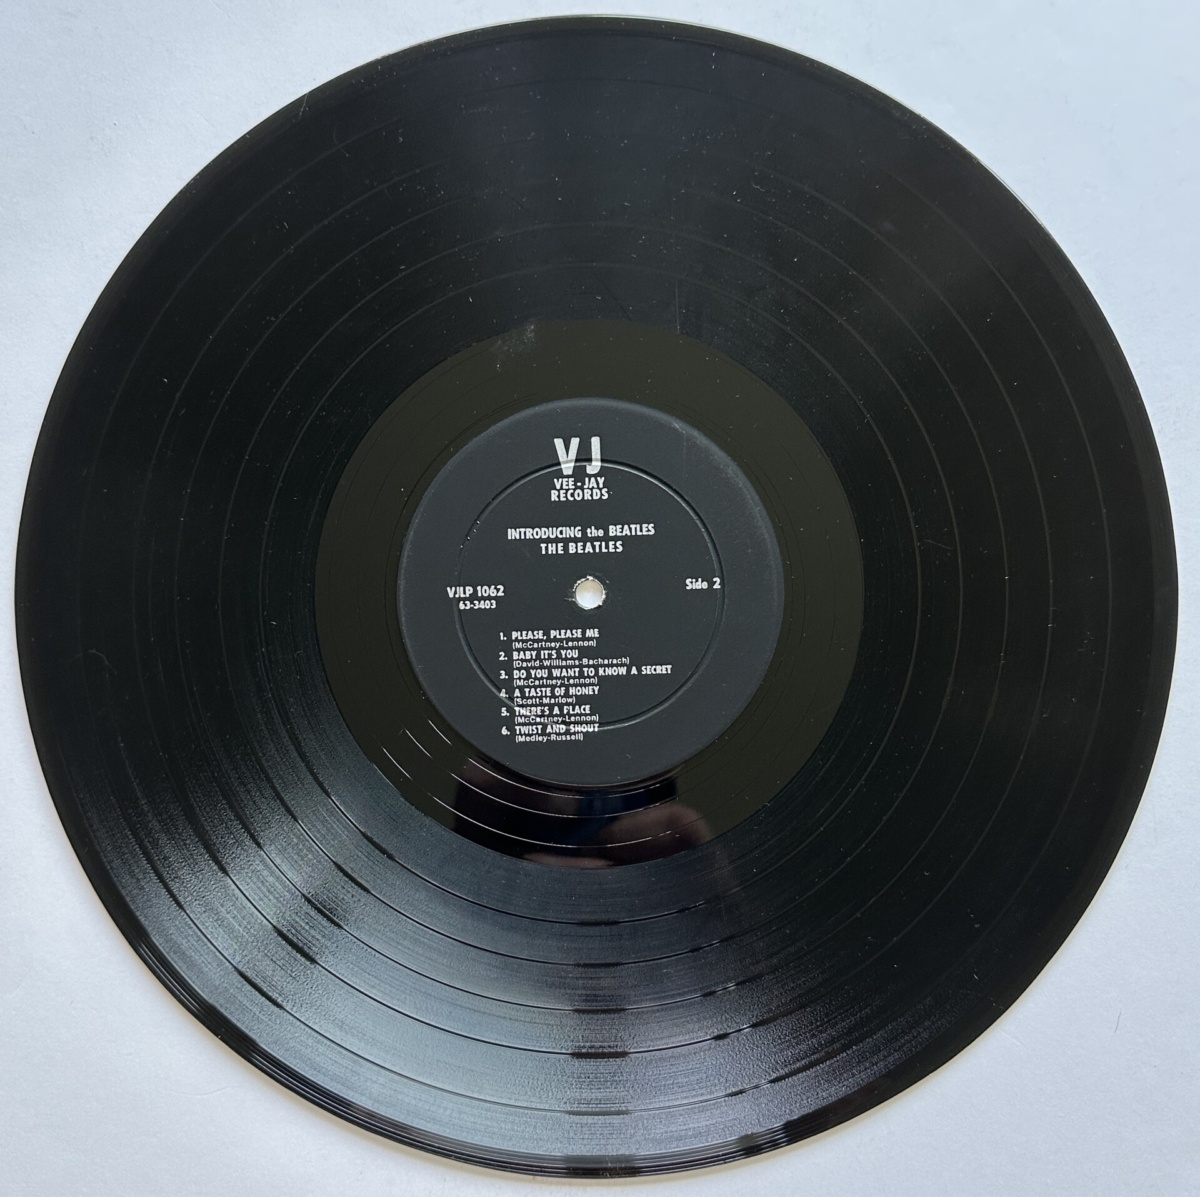 INTRODUCING THE BEATLES – Album (“Ask Me Why”) – Beatle Memories